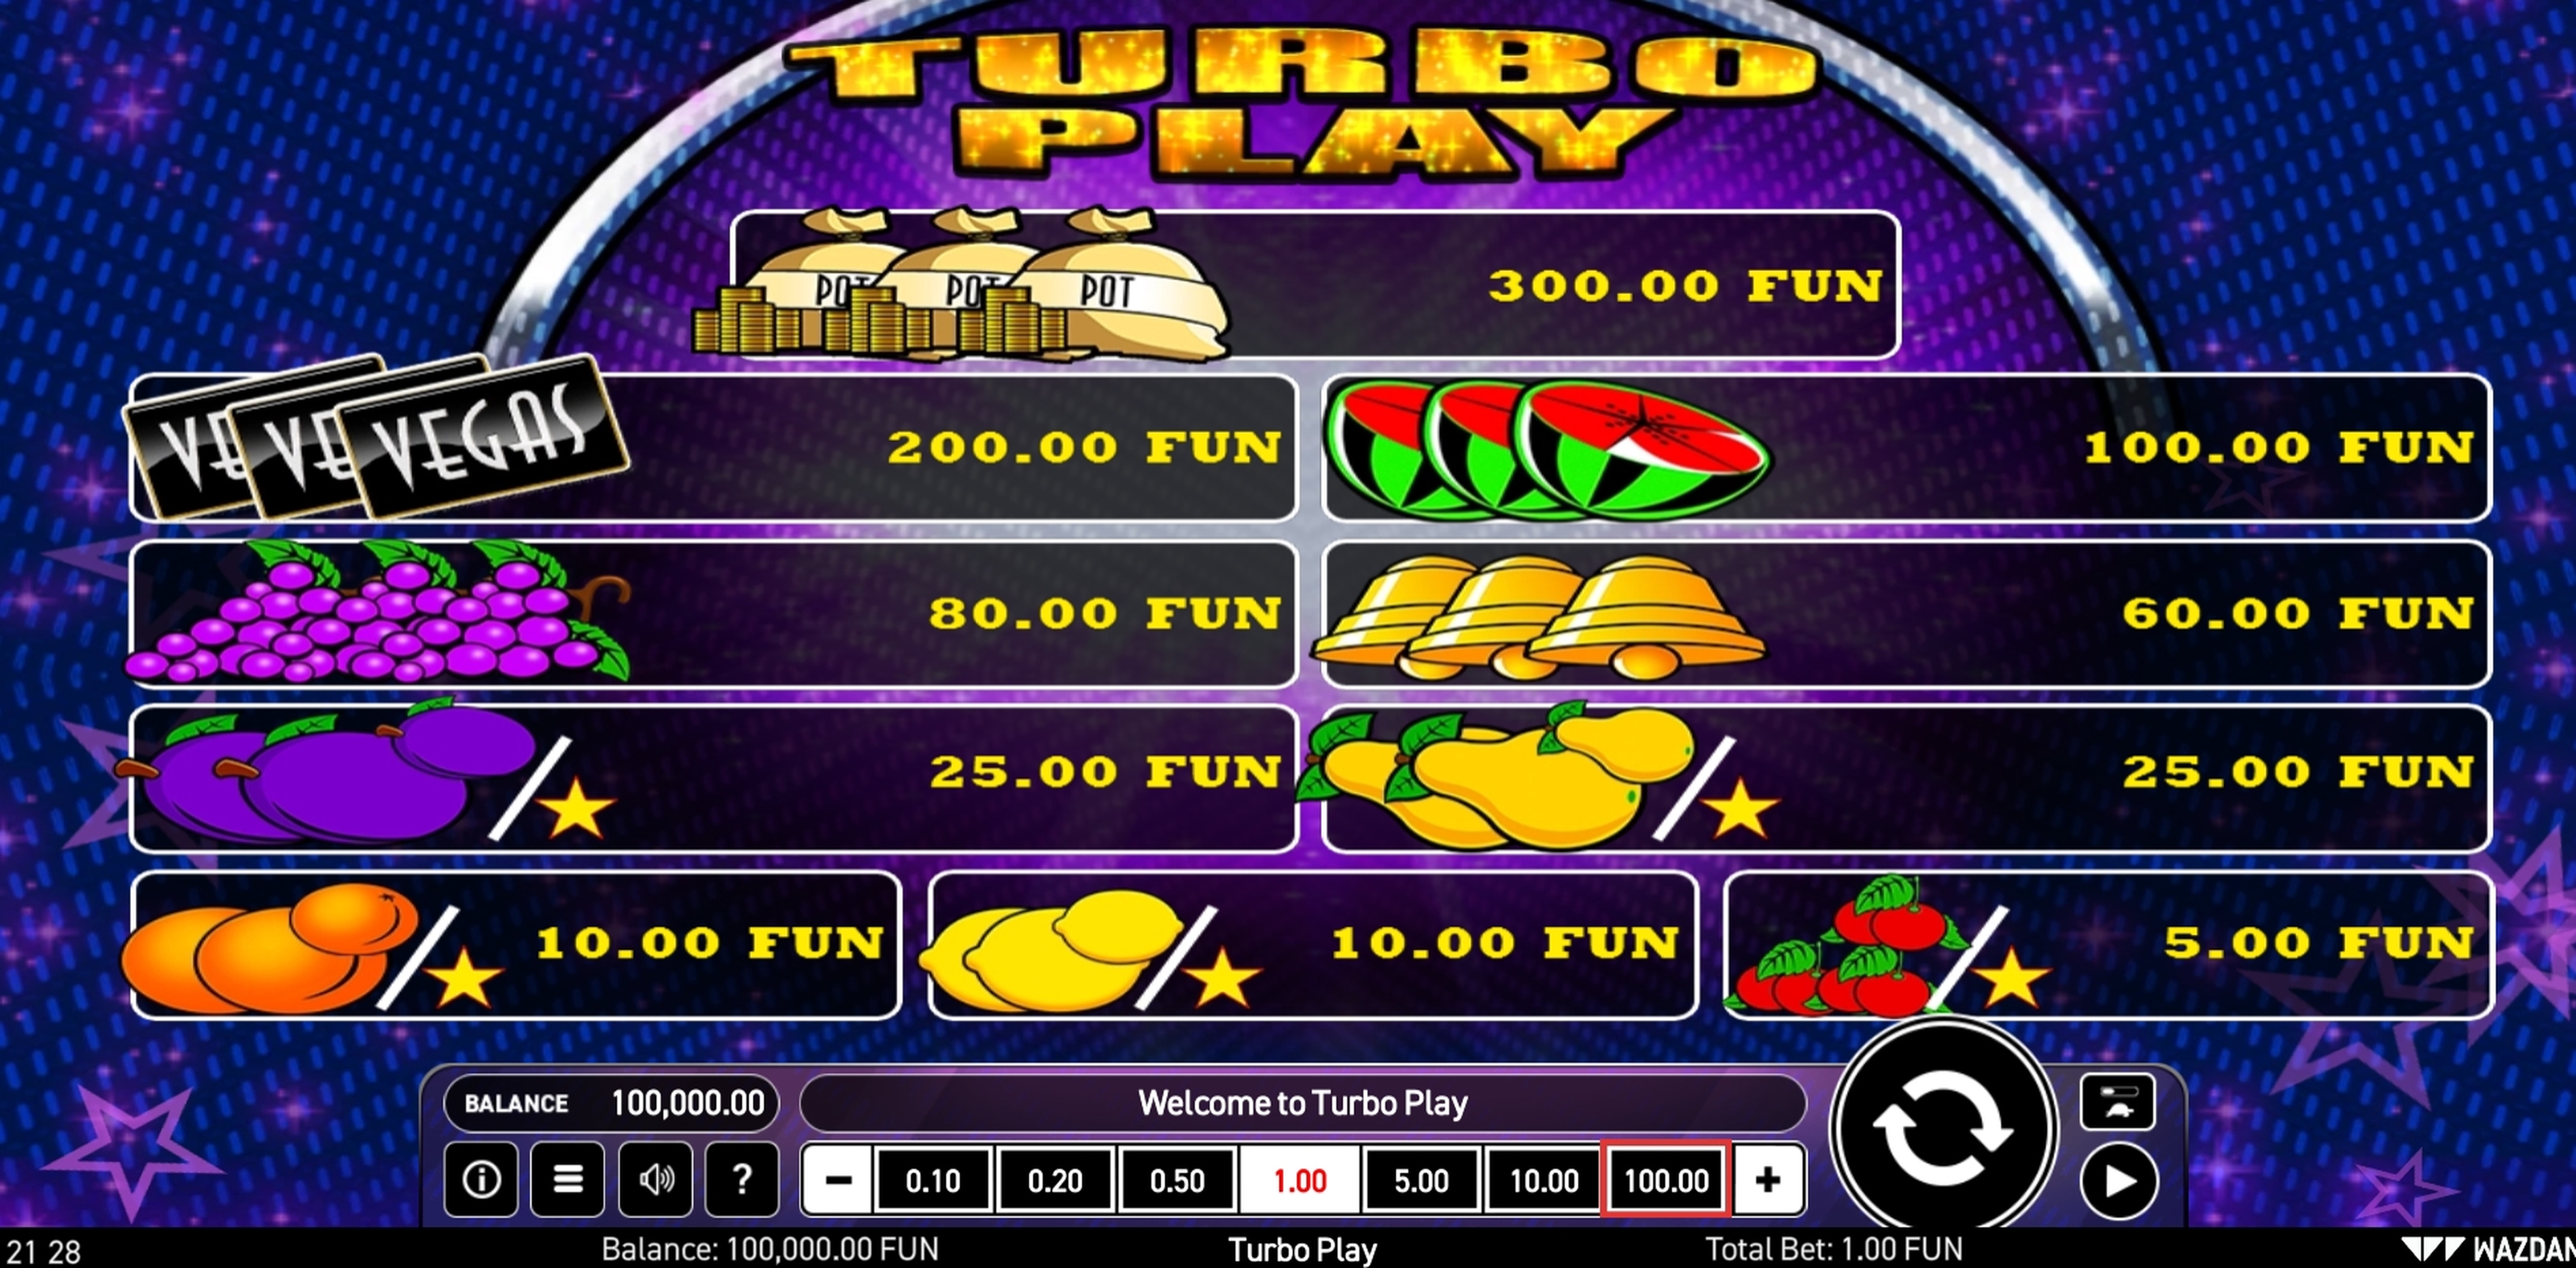 Info of Turbo Play Slot Game by Wazdan